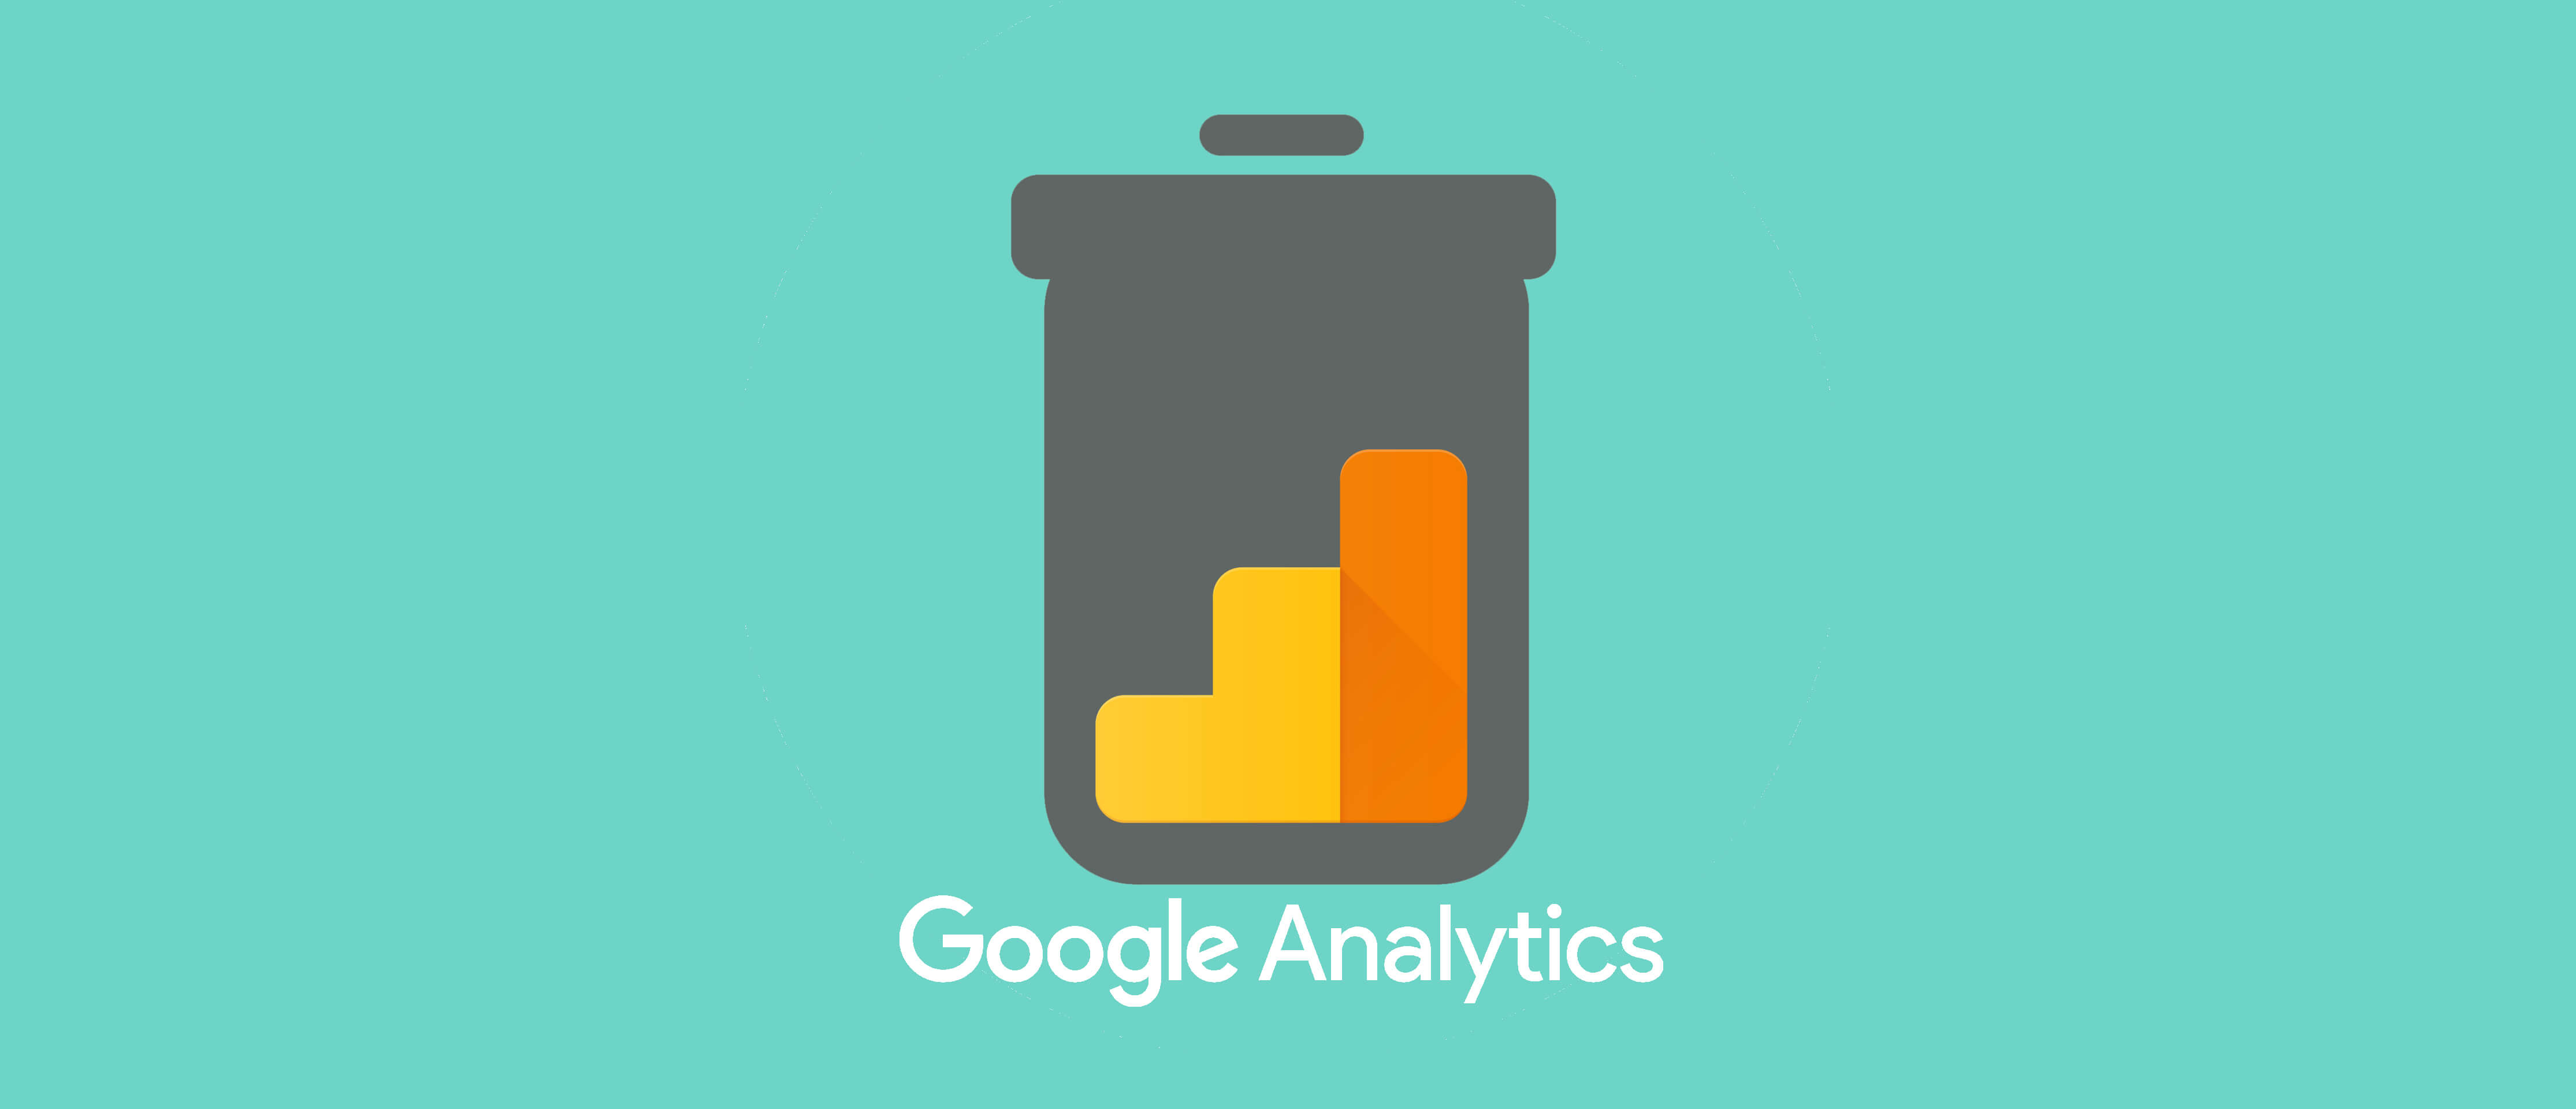 Google Analytics Introduces Data Retention Controls